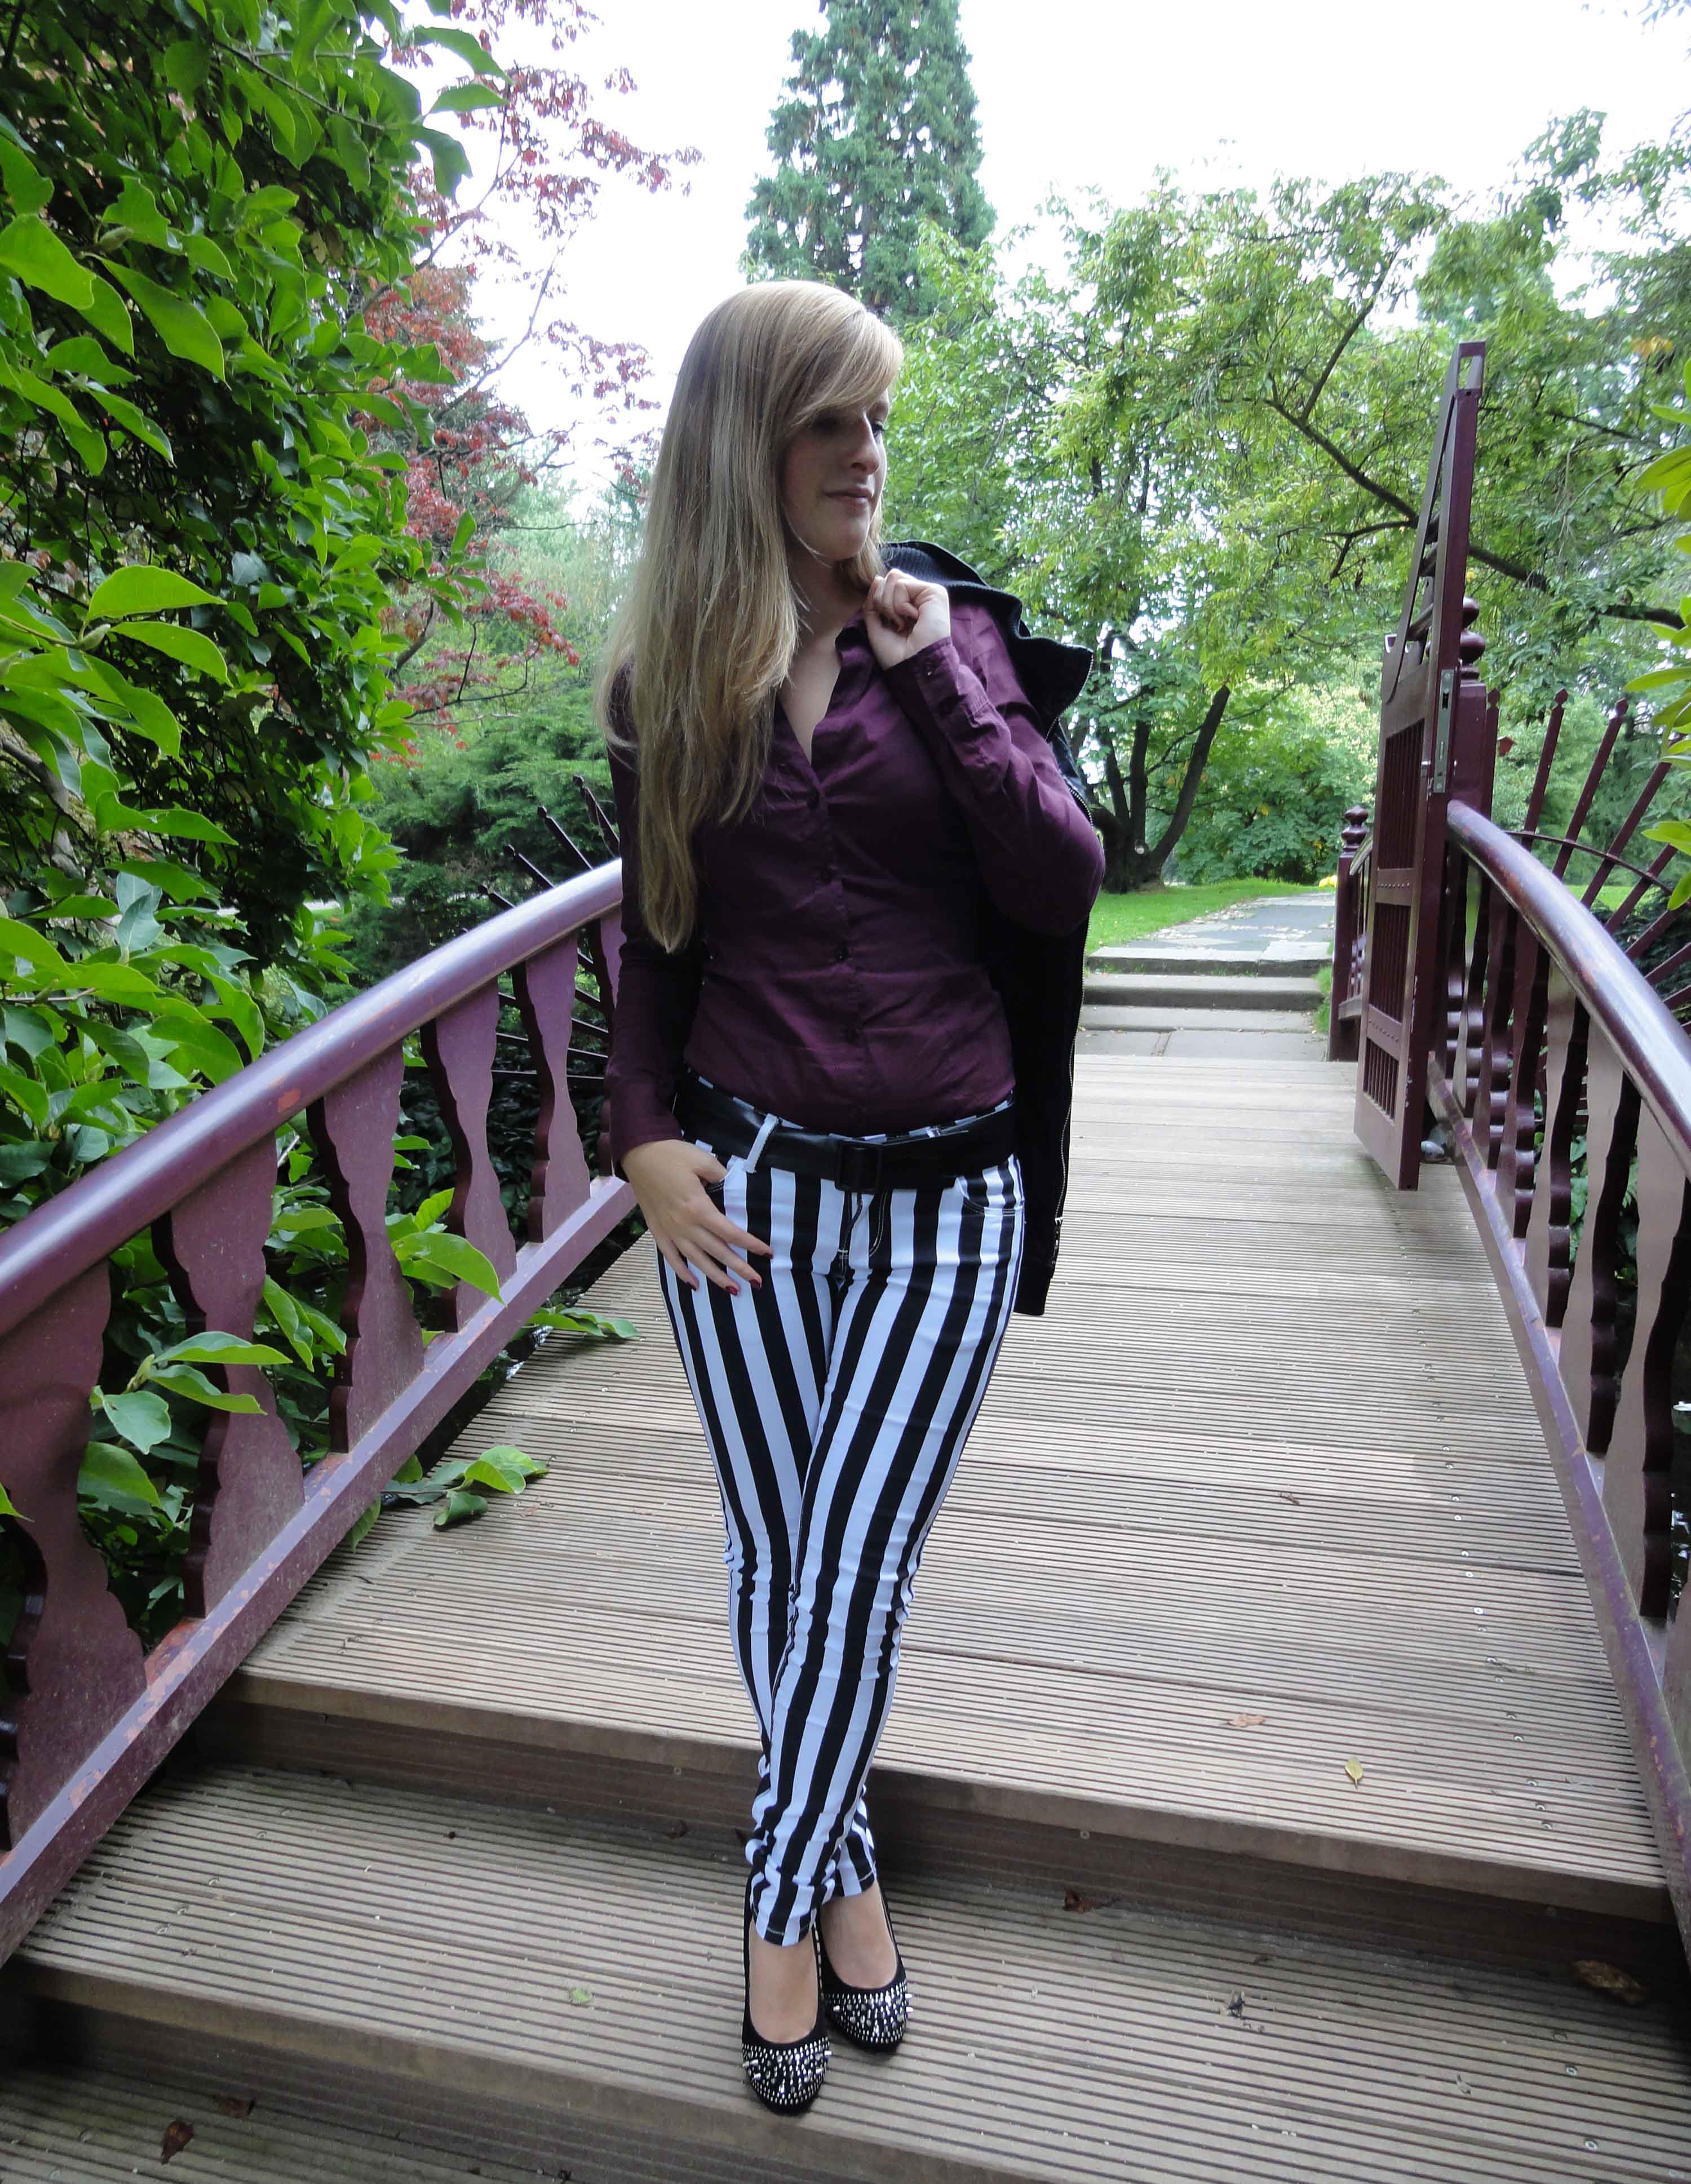 Stripes Rules Modeblog schwarz weiß gestreifte Hose kombinieren streifen Outfit schwarze Lederjacke jajpanischer Garten 2